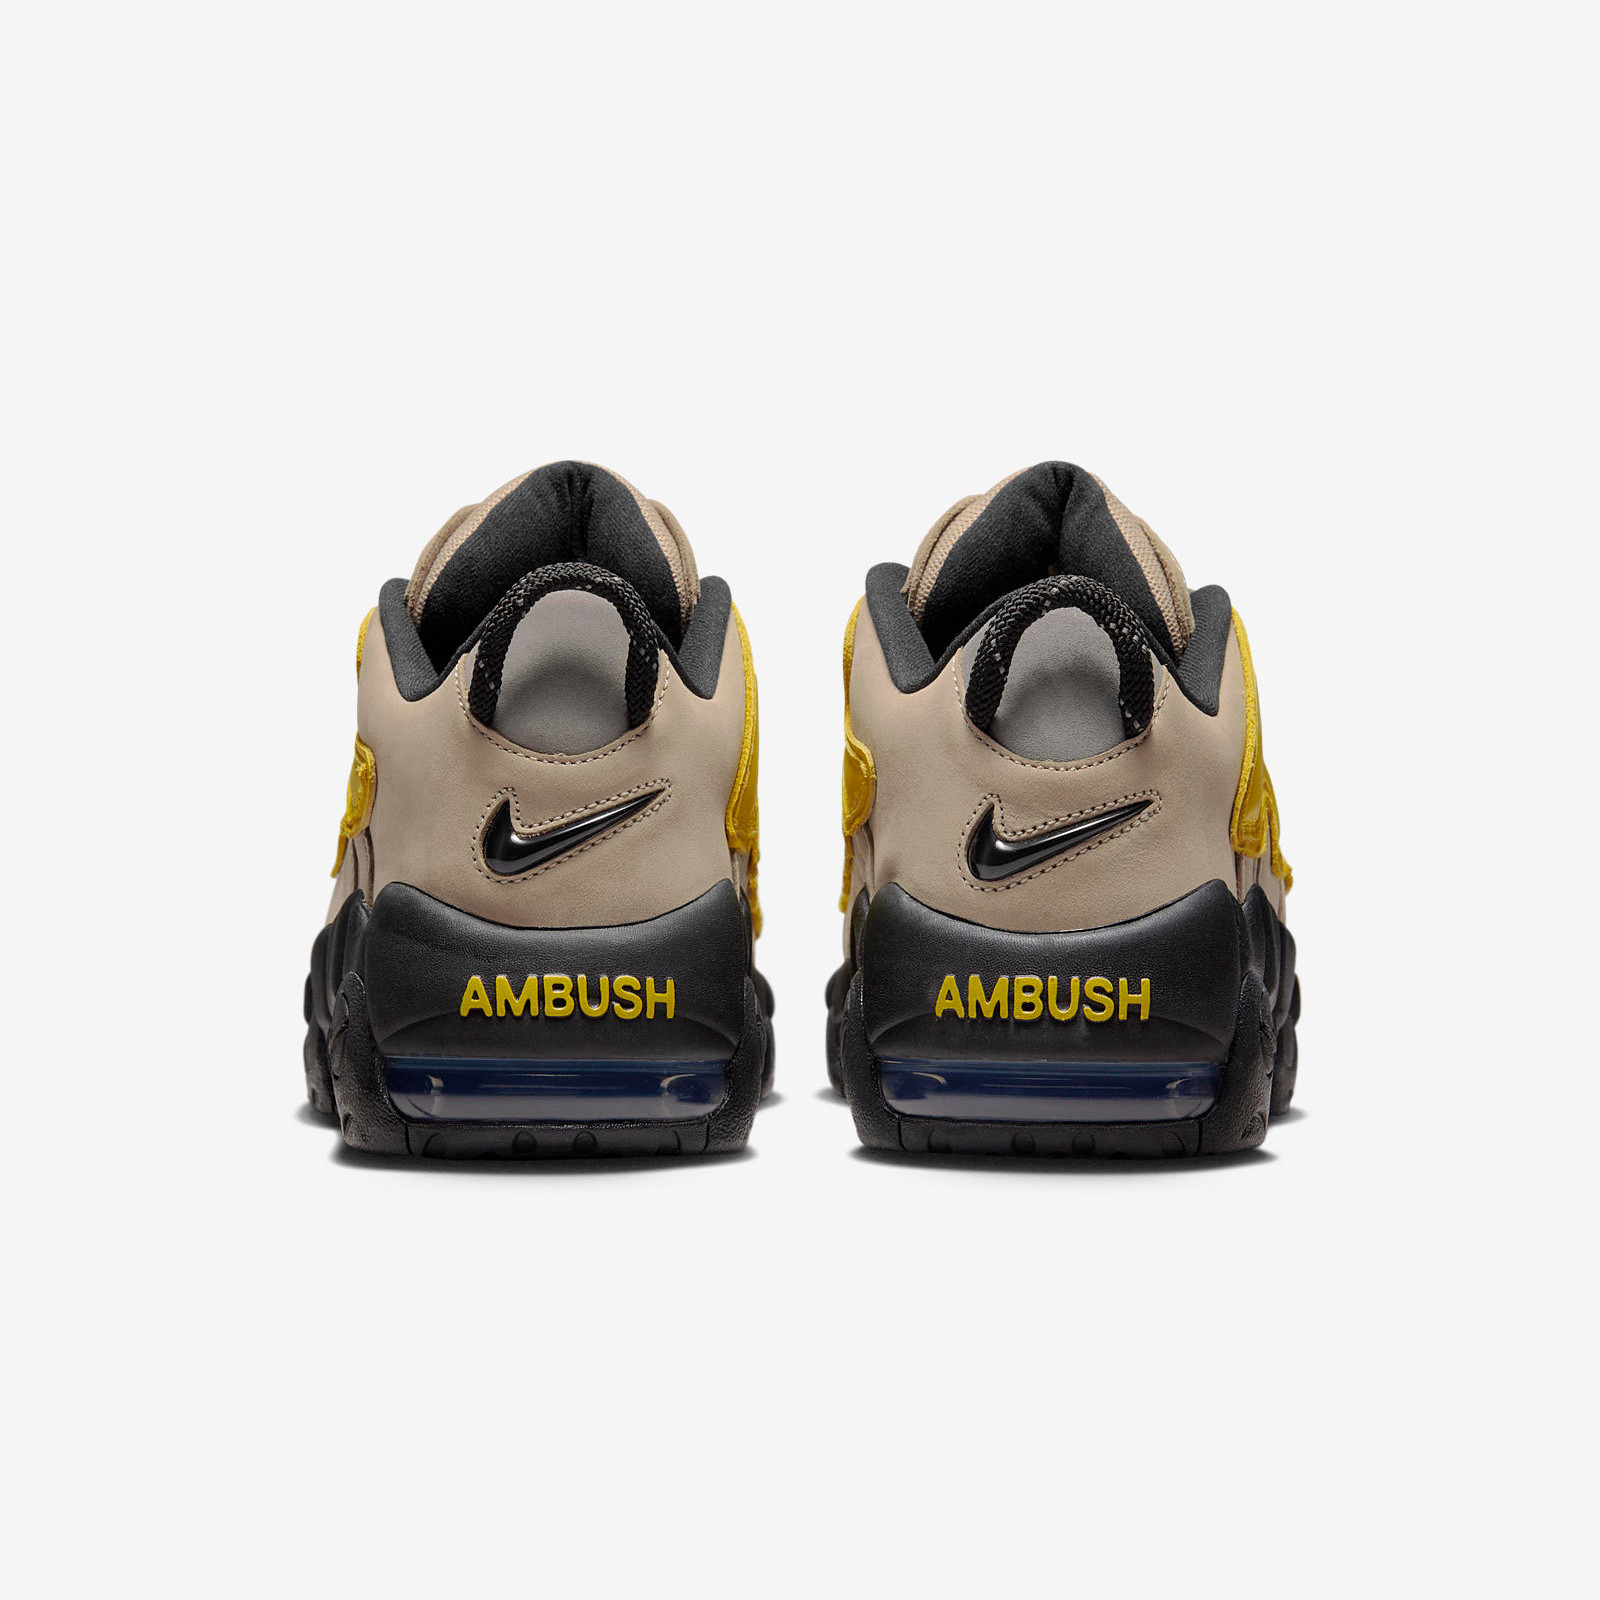 AMBUSH x Nike
Air More Uptempo Low
« Vivid Sulfur »